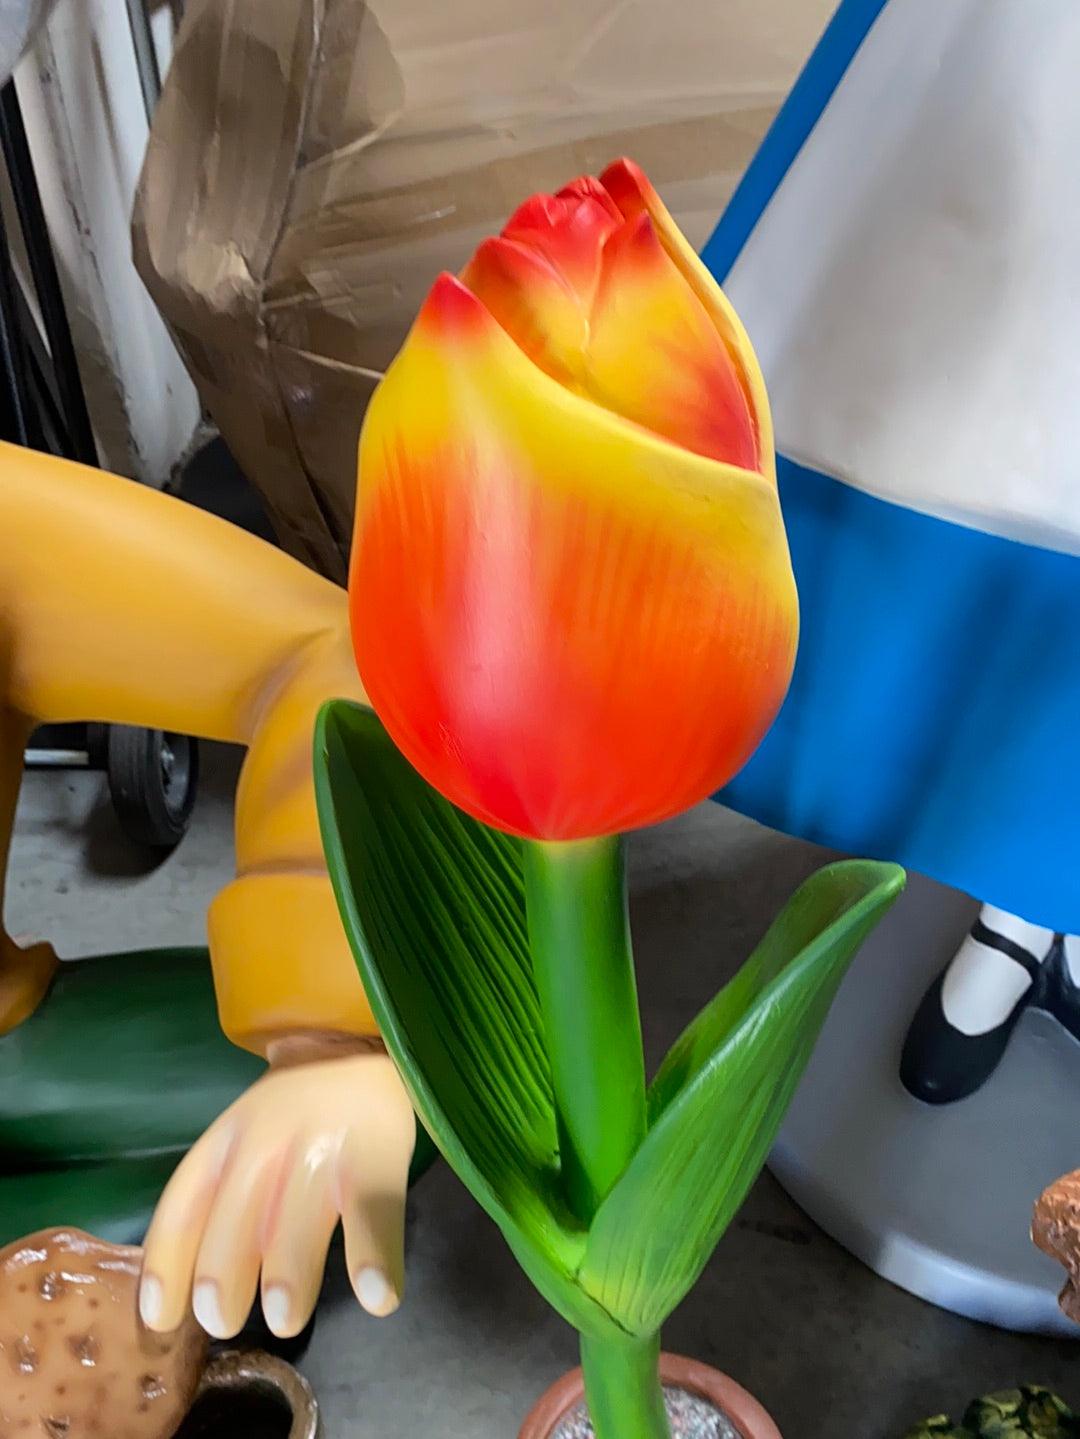 Small Tulip Flower Statue - LM Treasures Prop Rentals 